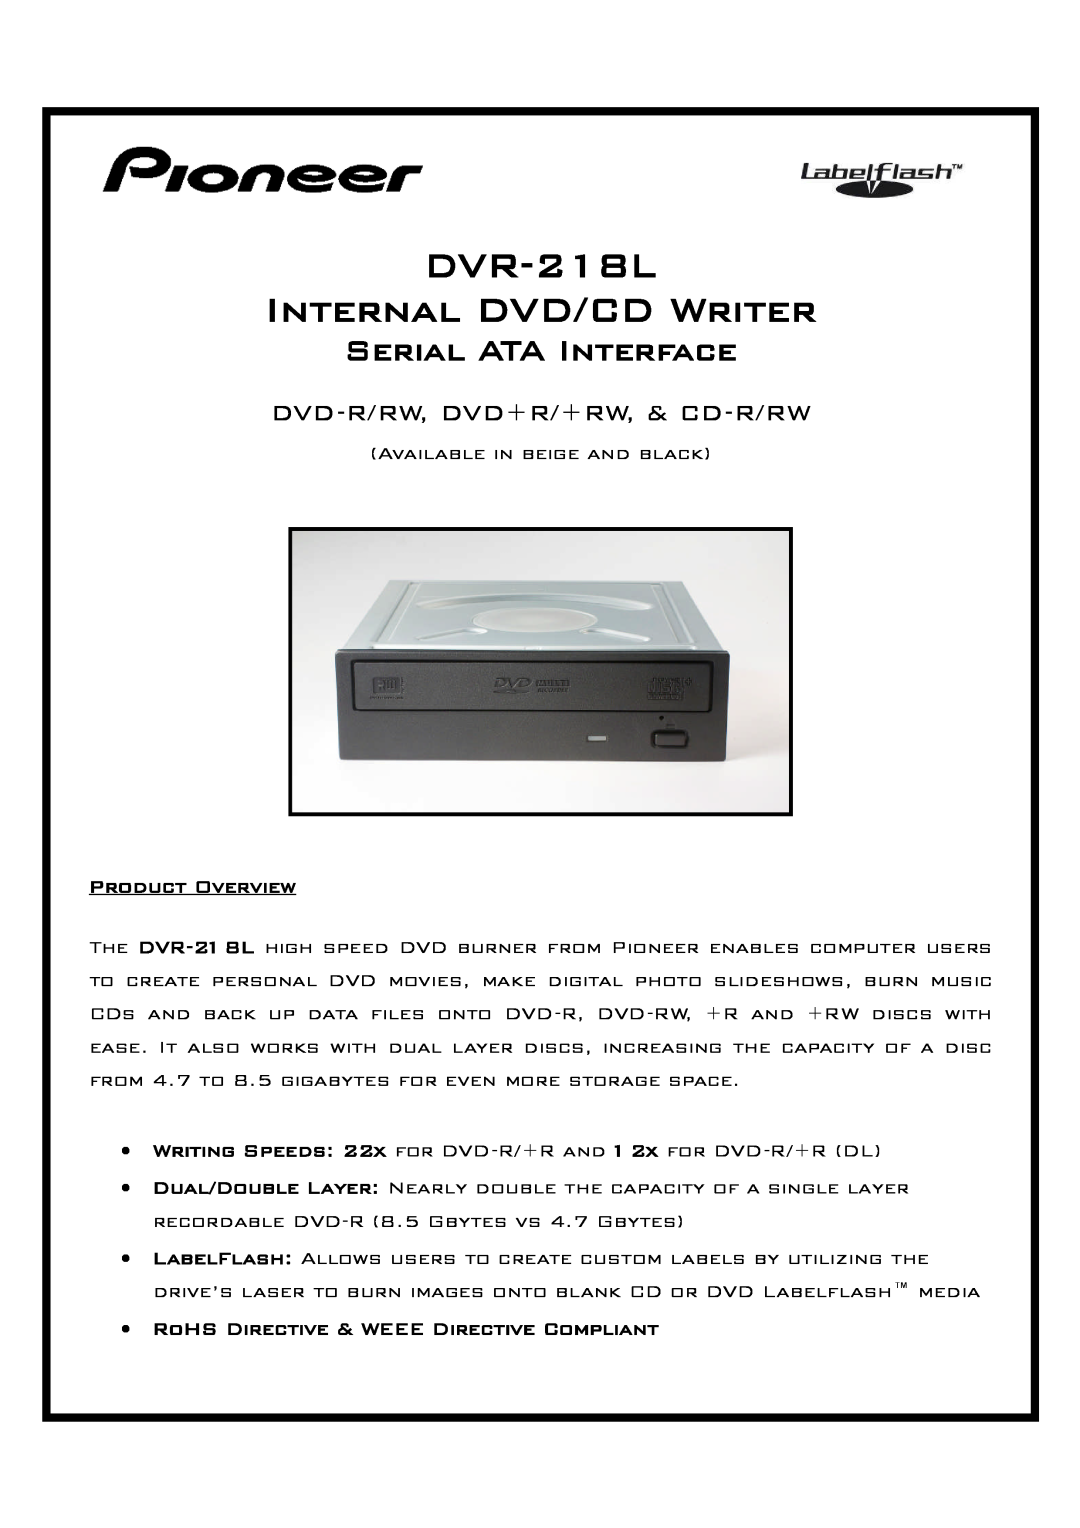 Pioneer manual DVR-218L Internal DVD/CD Writer, Serial ATA Interface, Dvd-R/Rw, Dvd+R/+Rw, & Cd-R/Rw, Product Overview 